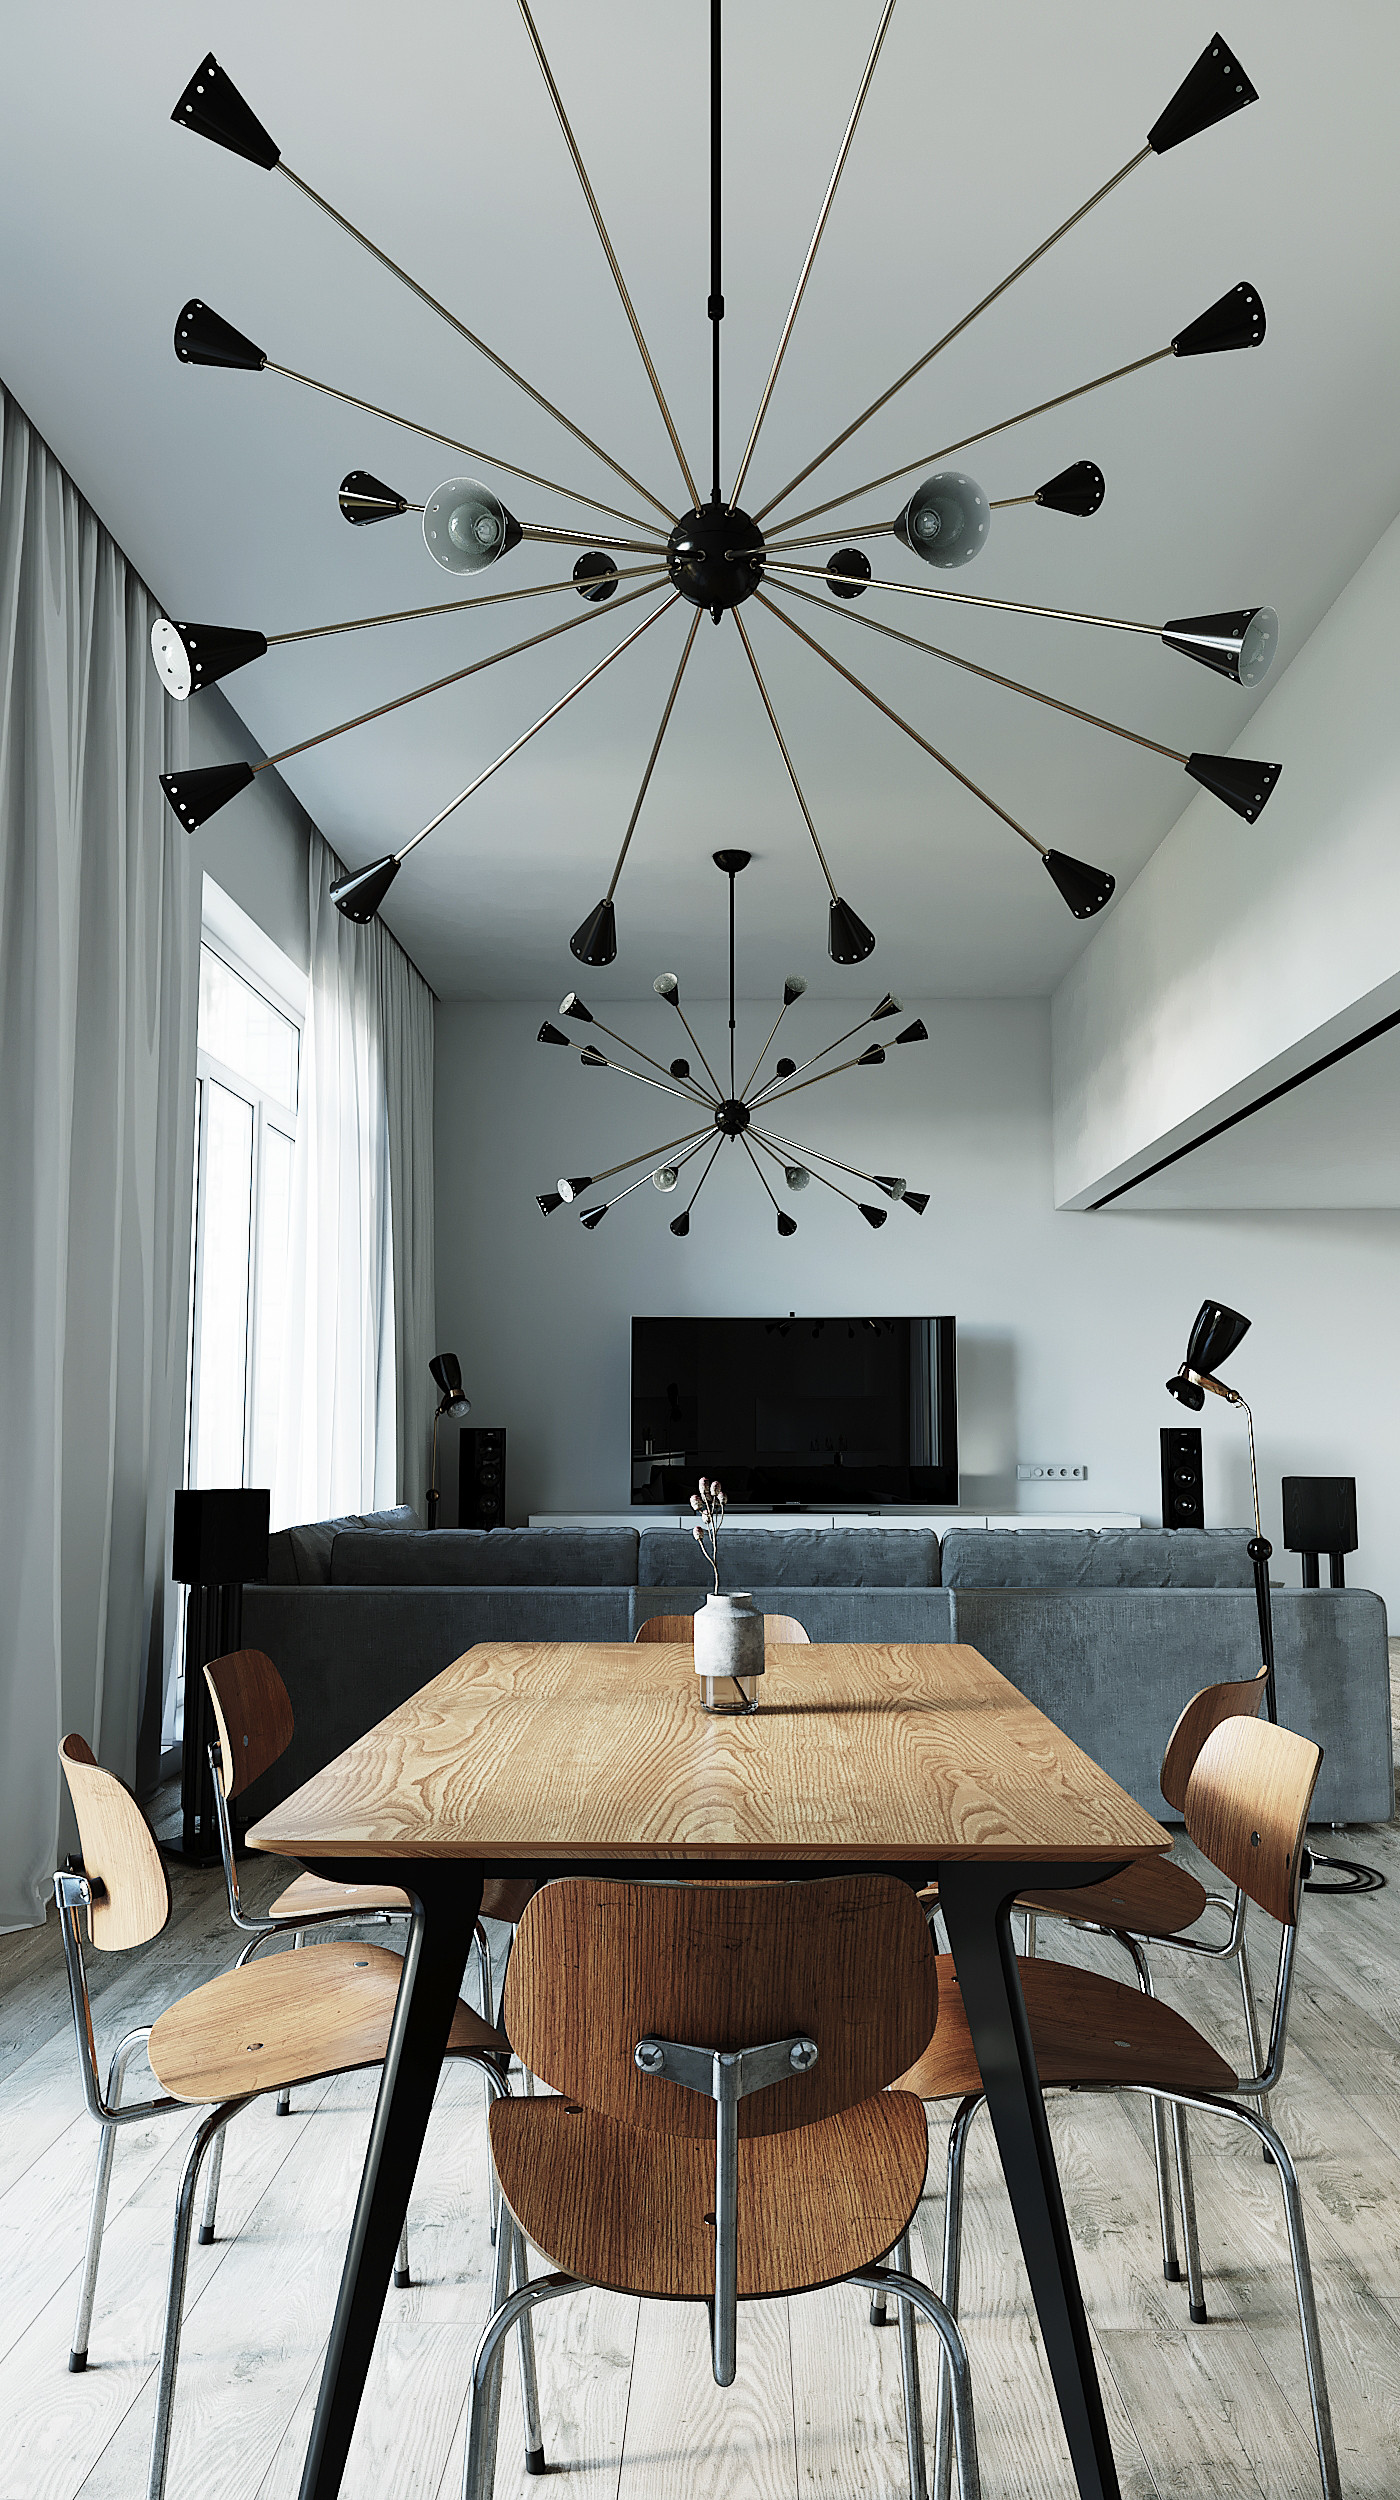 Unique Lamps For Living Room
 Mid Century Floor Lamps in an Unique Interior Design Project